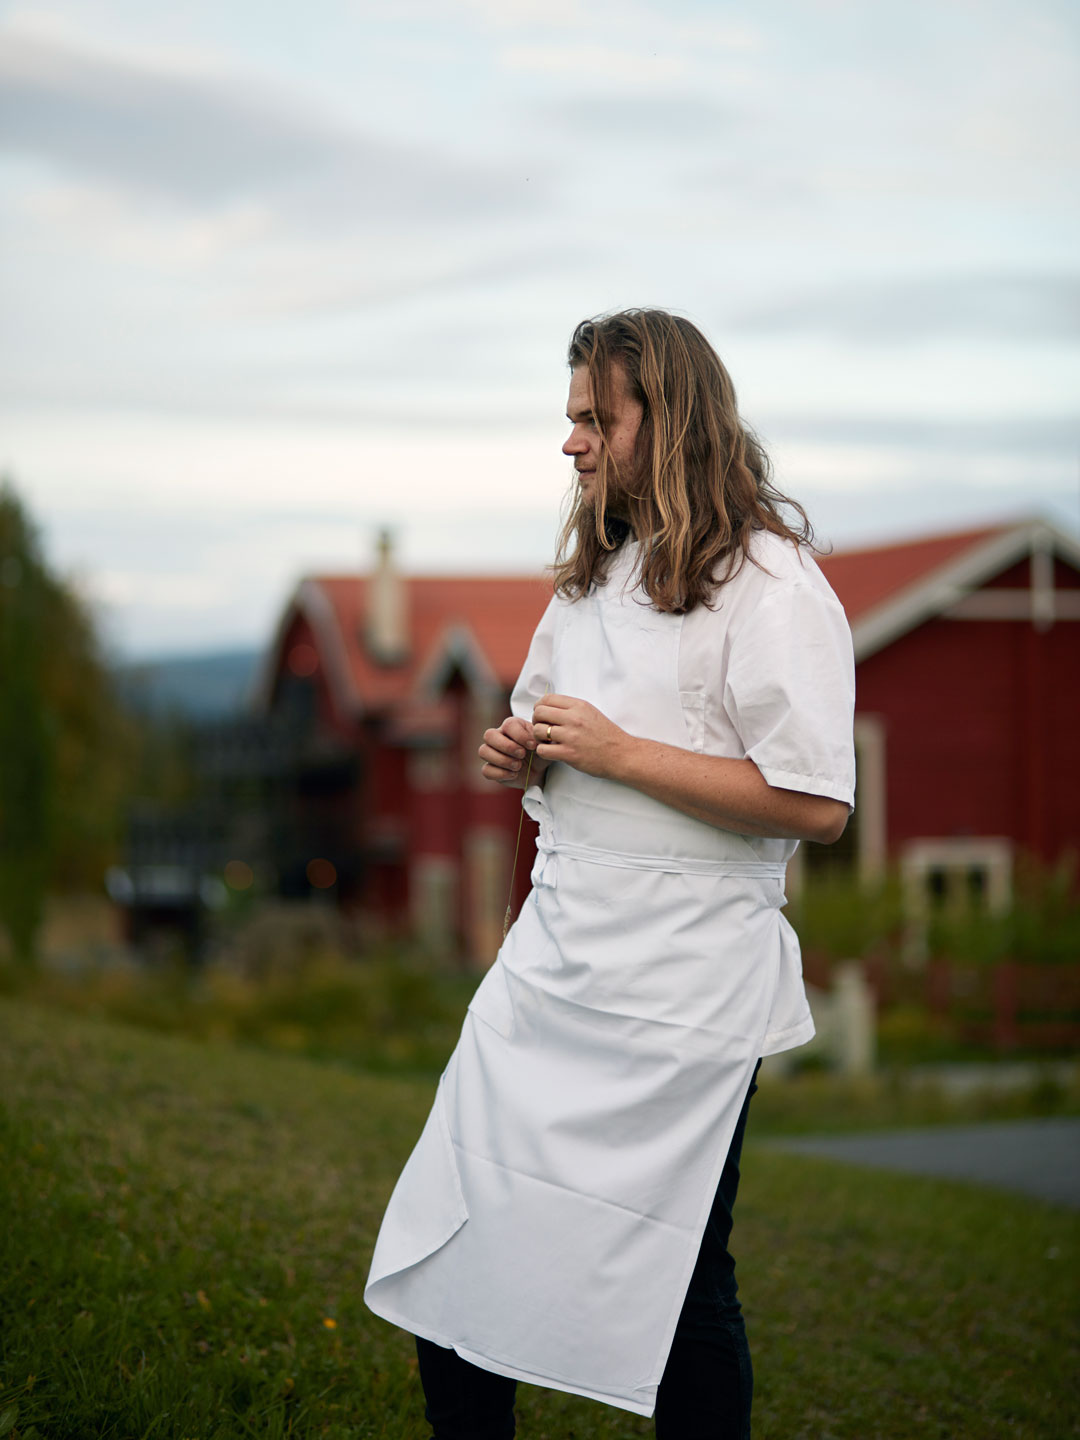 Magnus Nilsson. Photograph by Erik Olsson